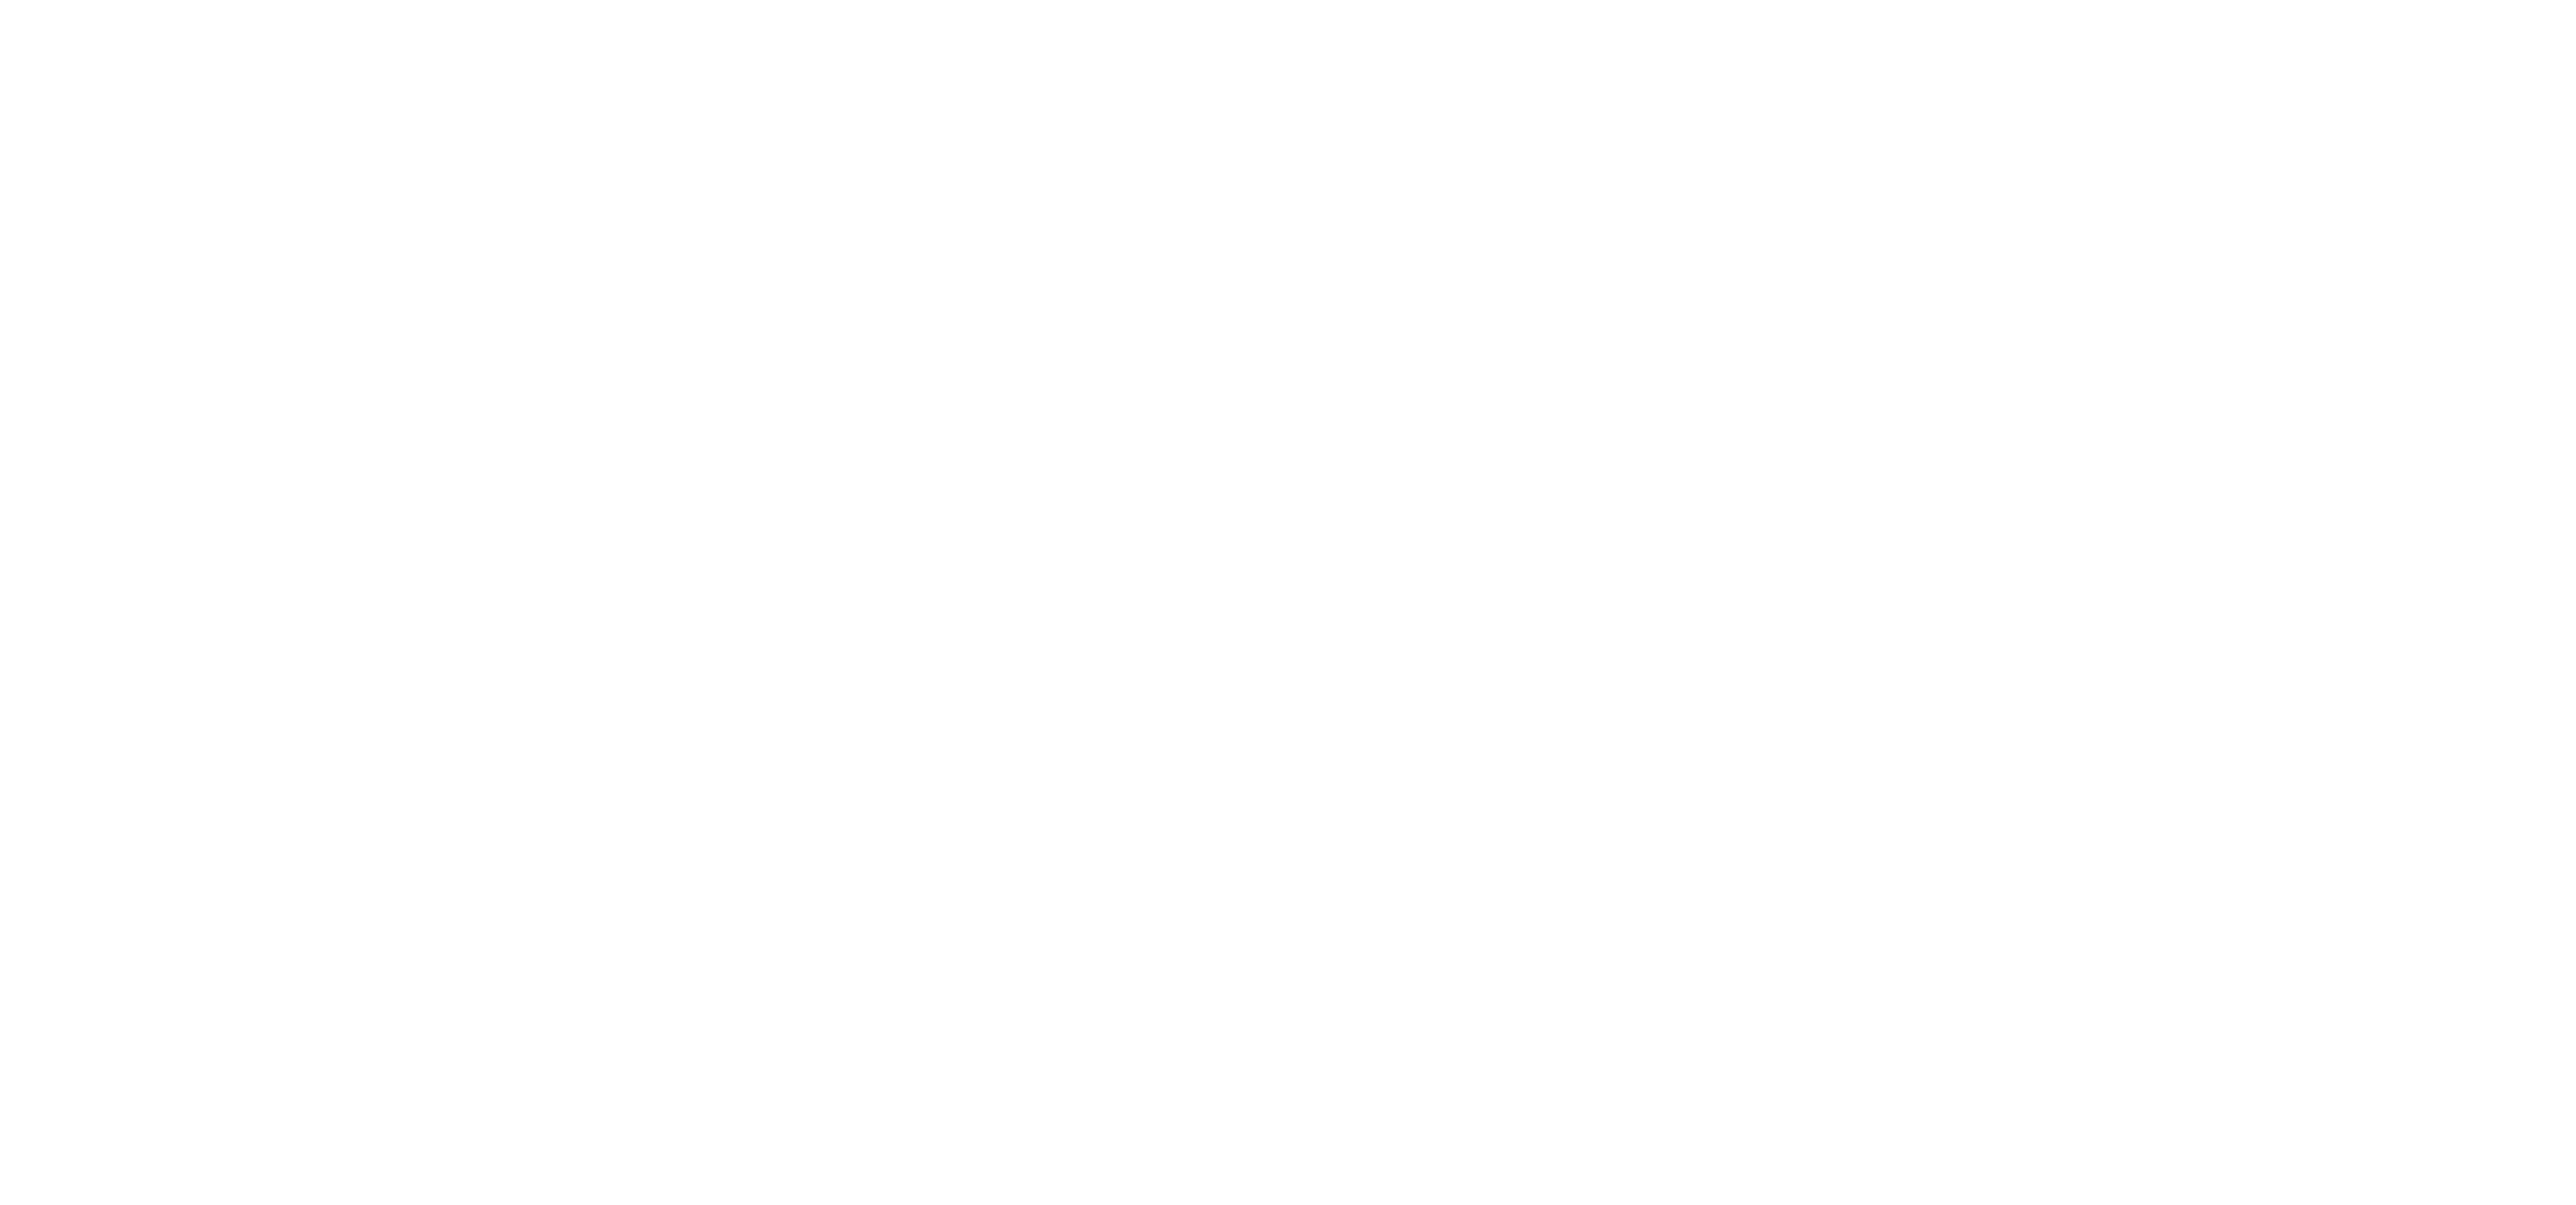 Picoty : Logo Taupin blanc